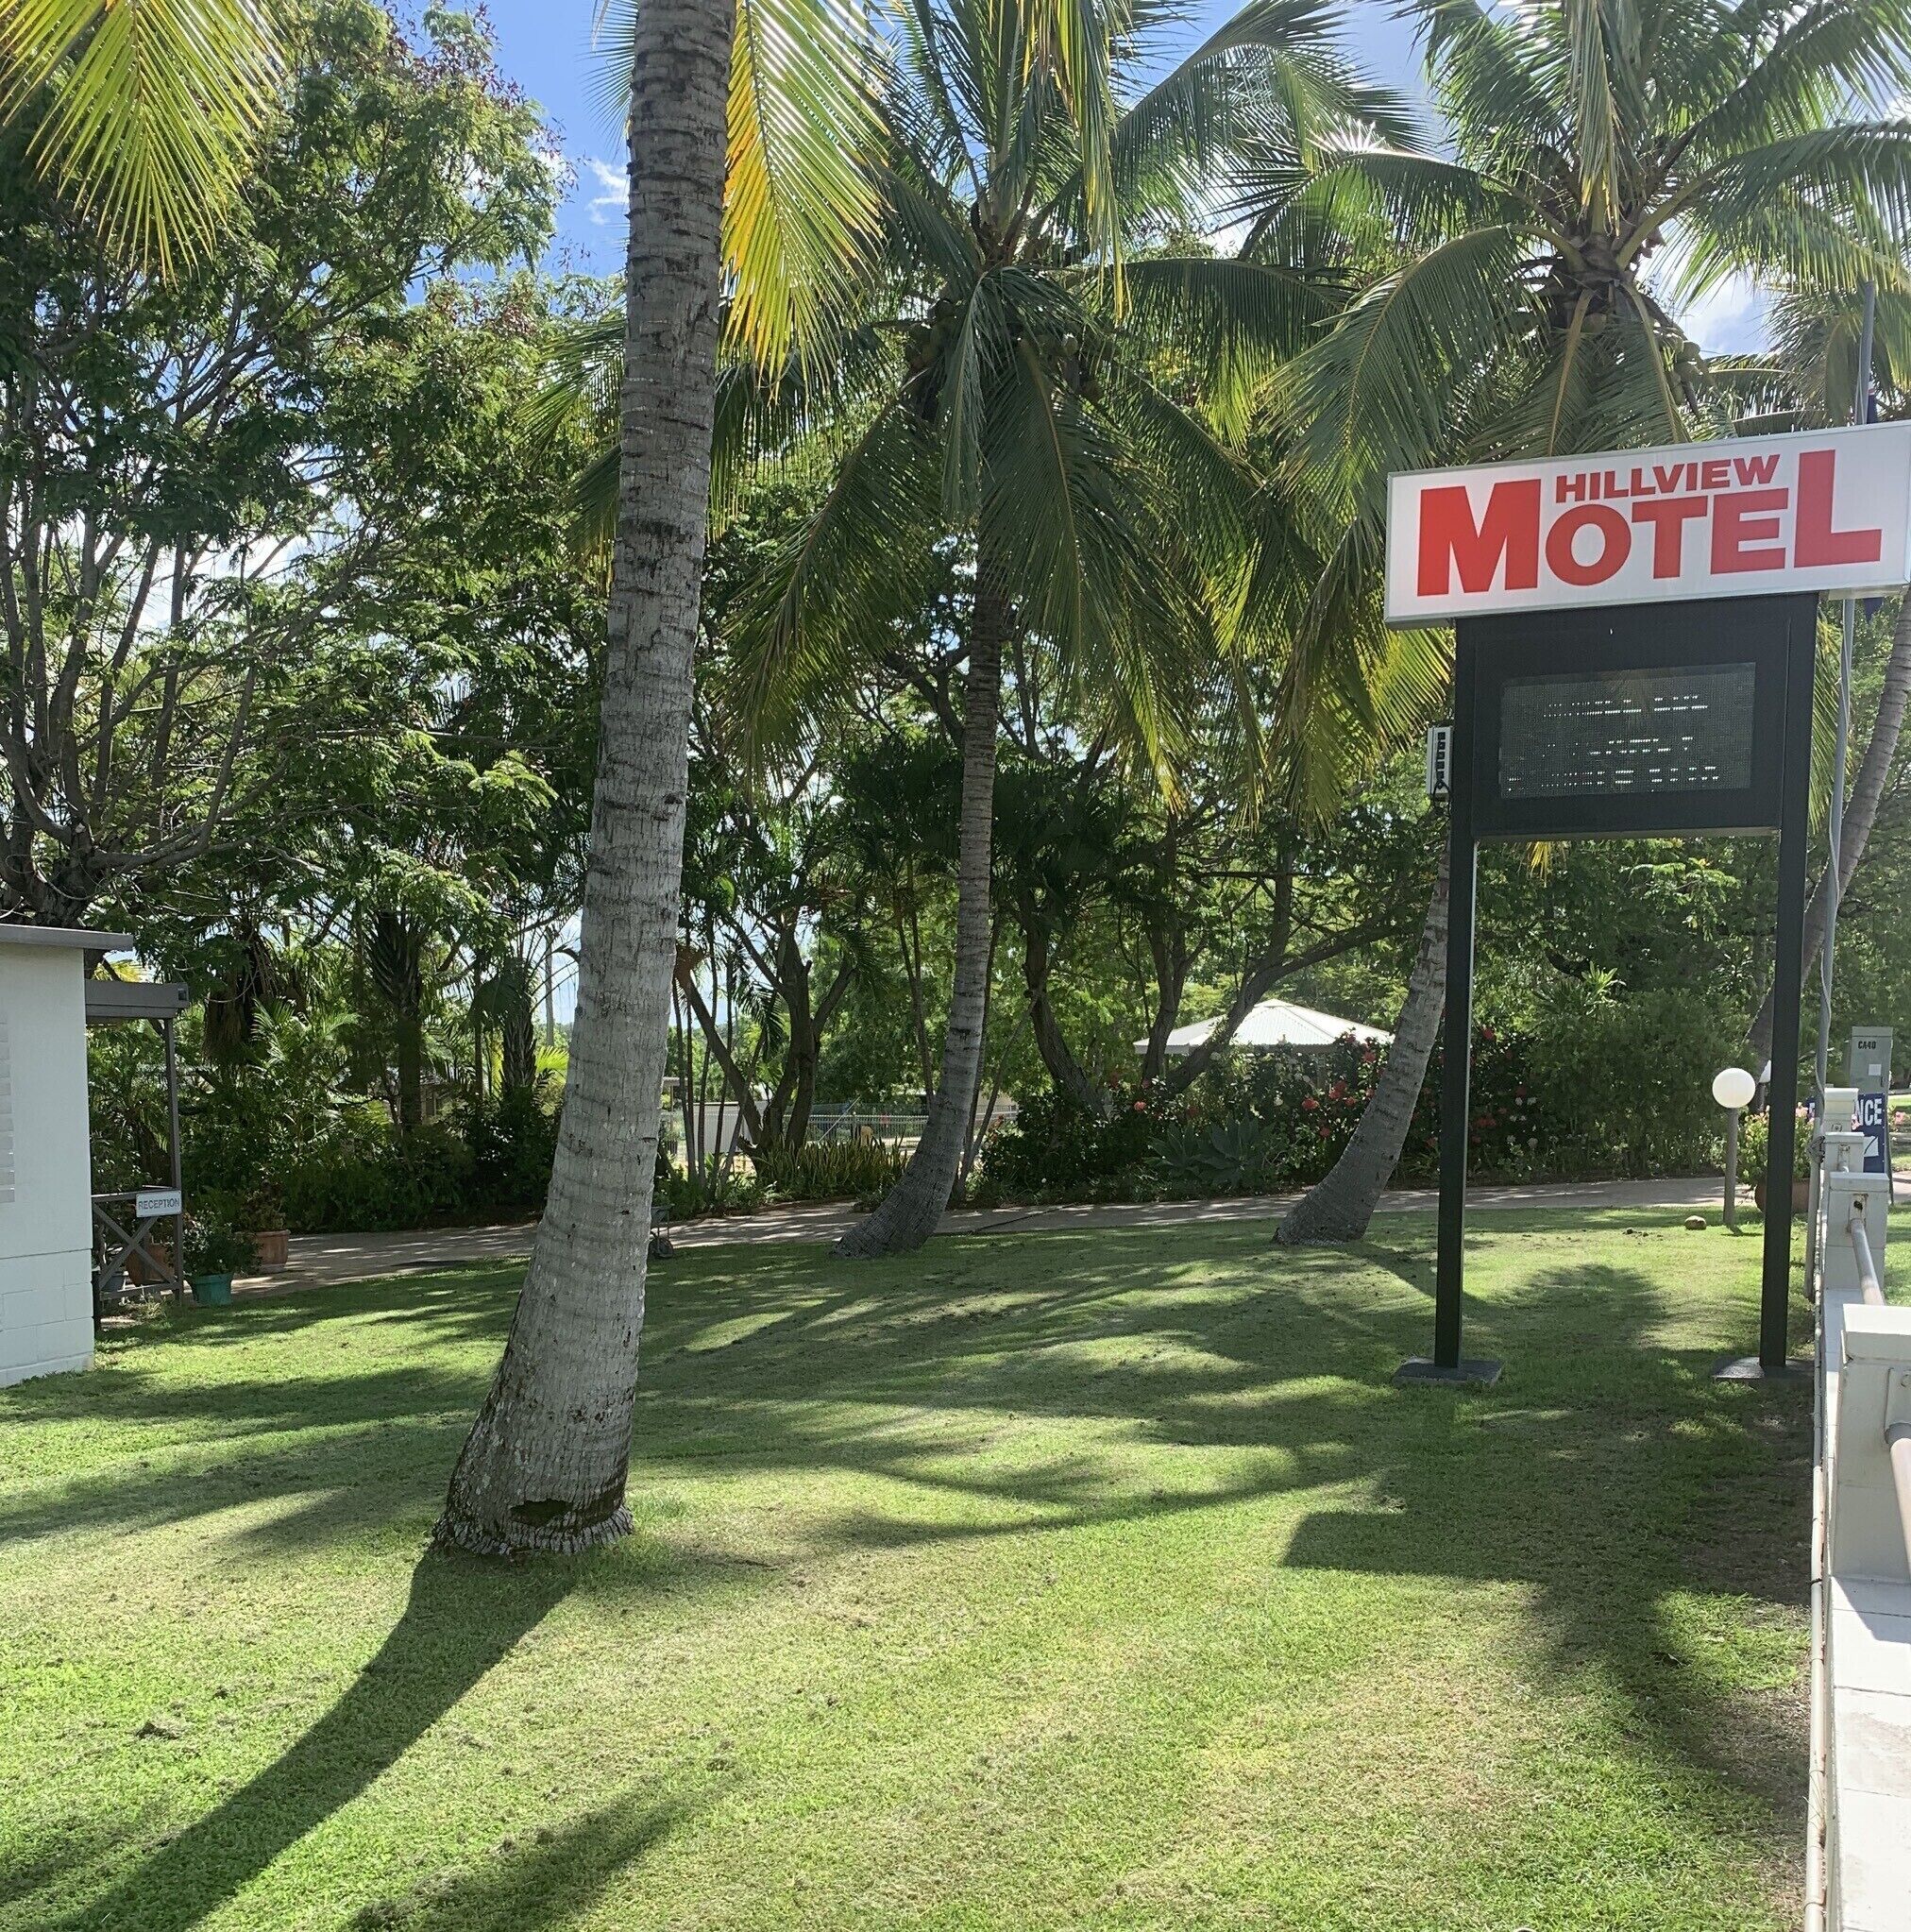 Hillview Motel